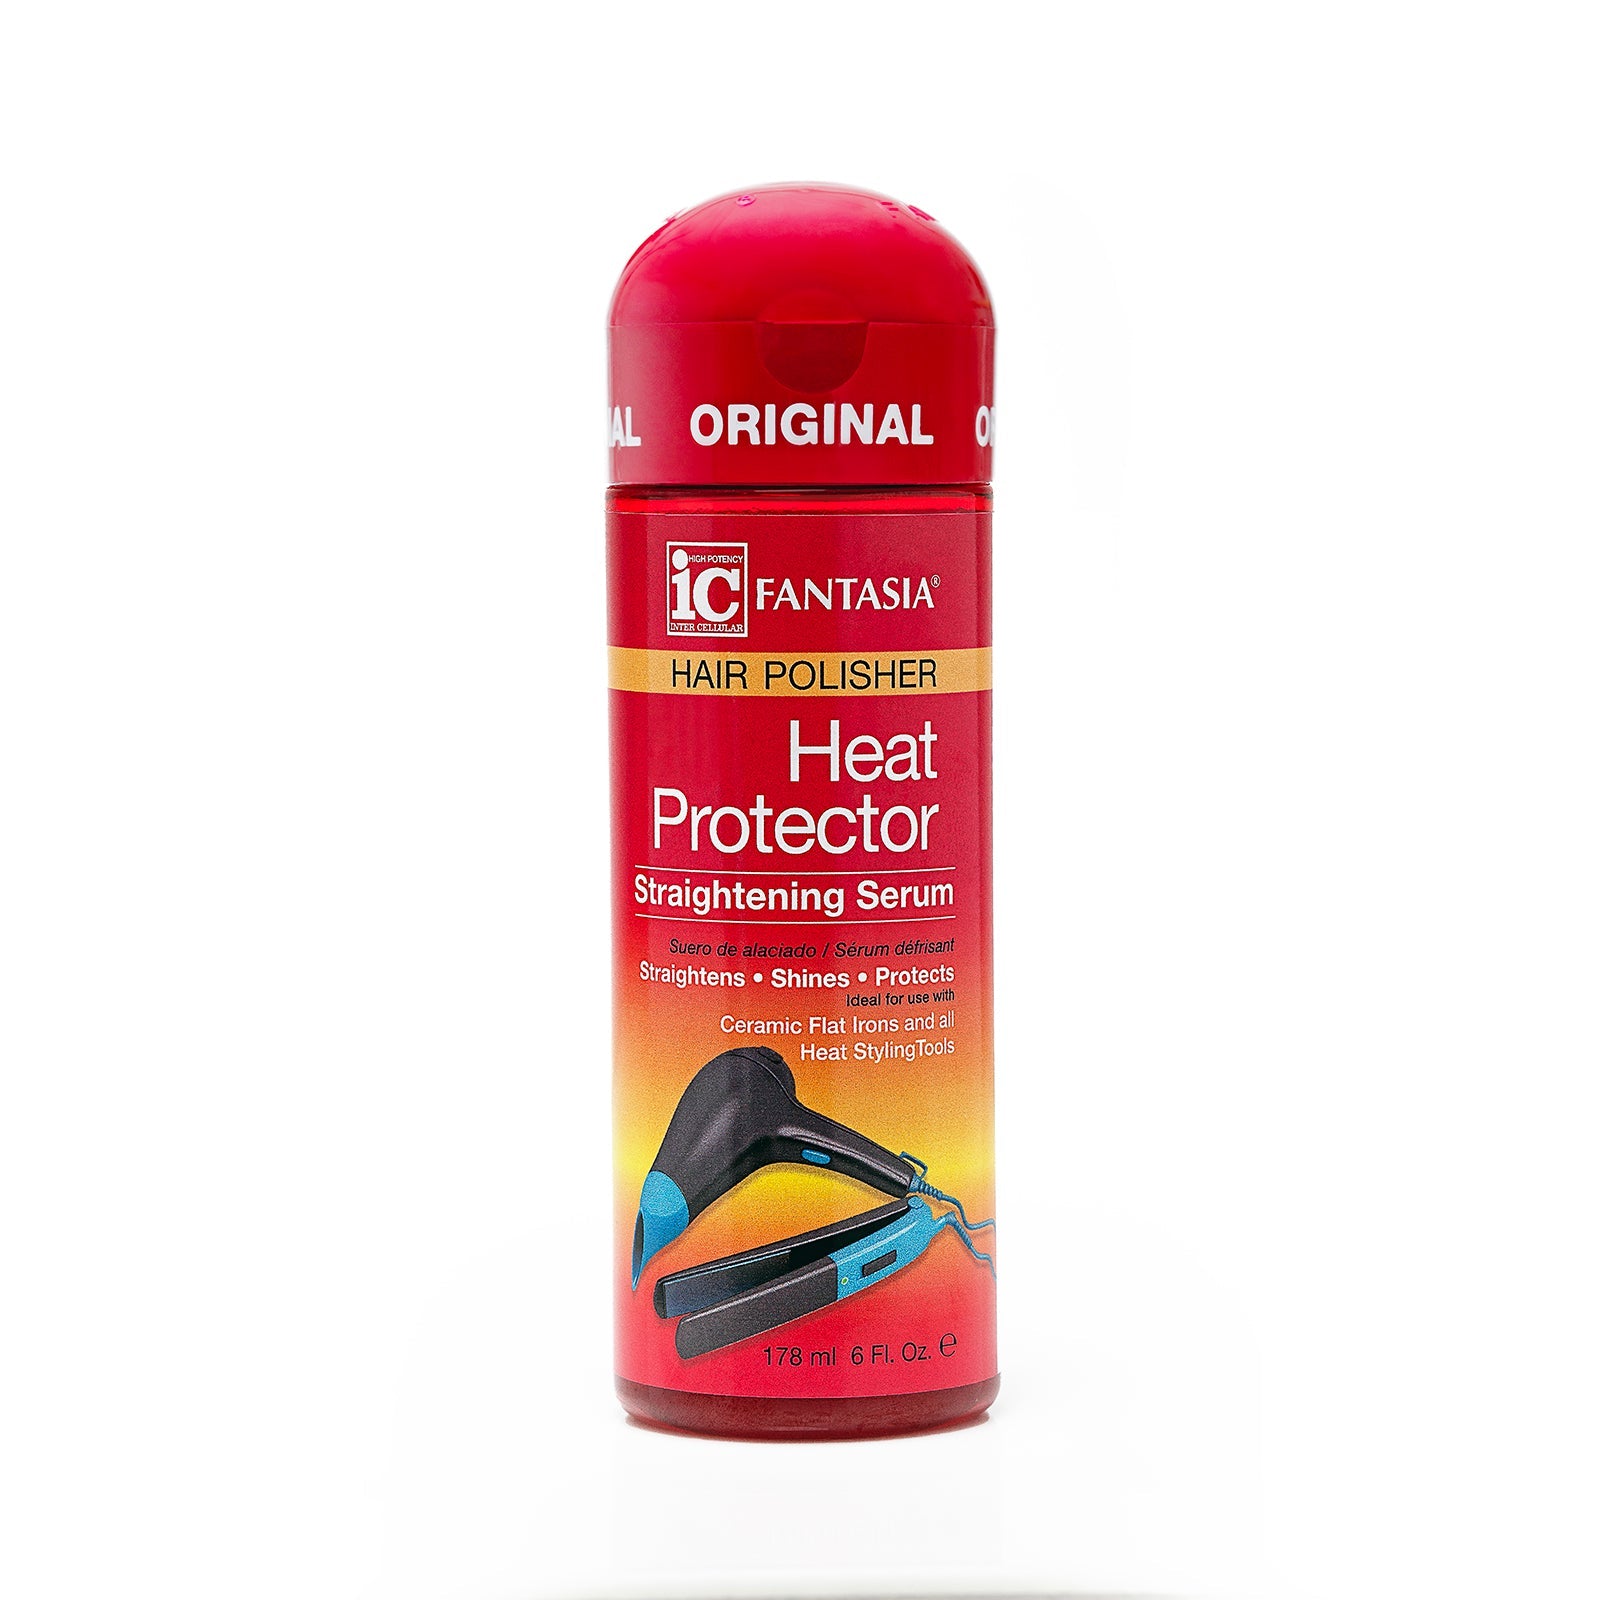 Fantasia IC Hair Polisher Heat Protector Straightening Serum, 6.0 Oz (FN413015)